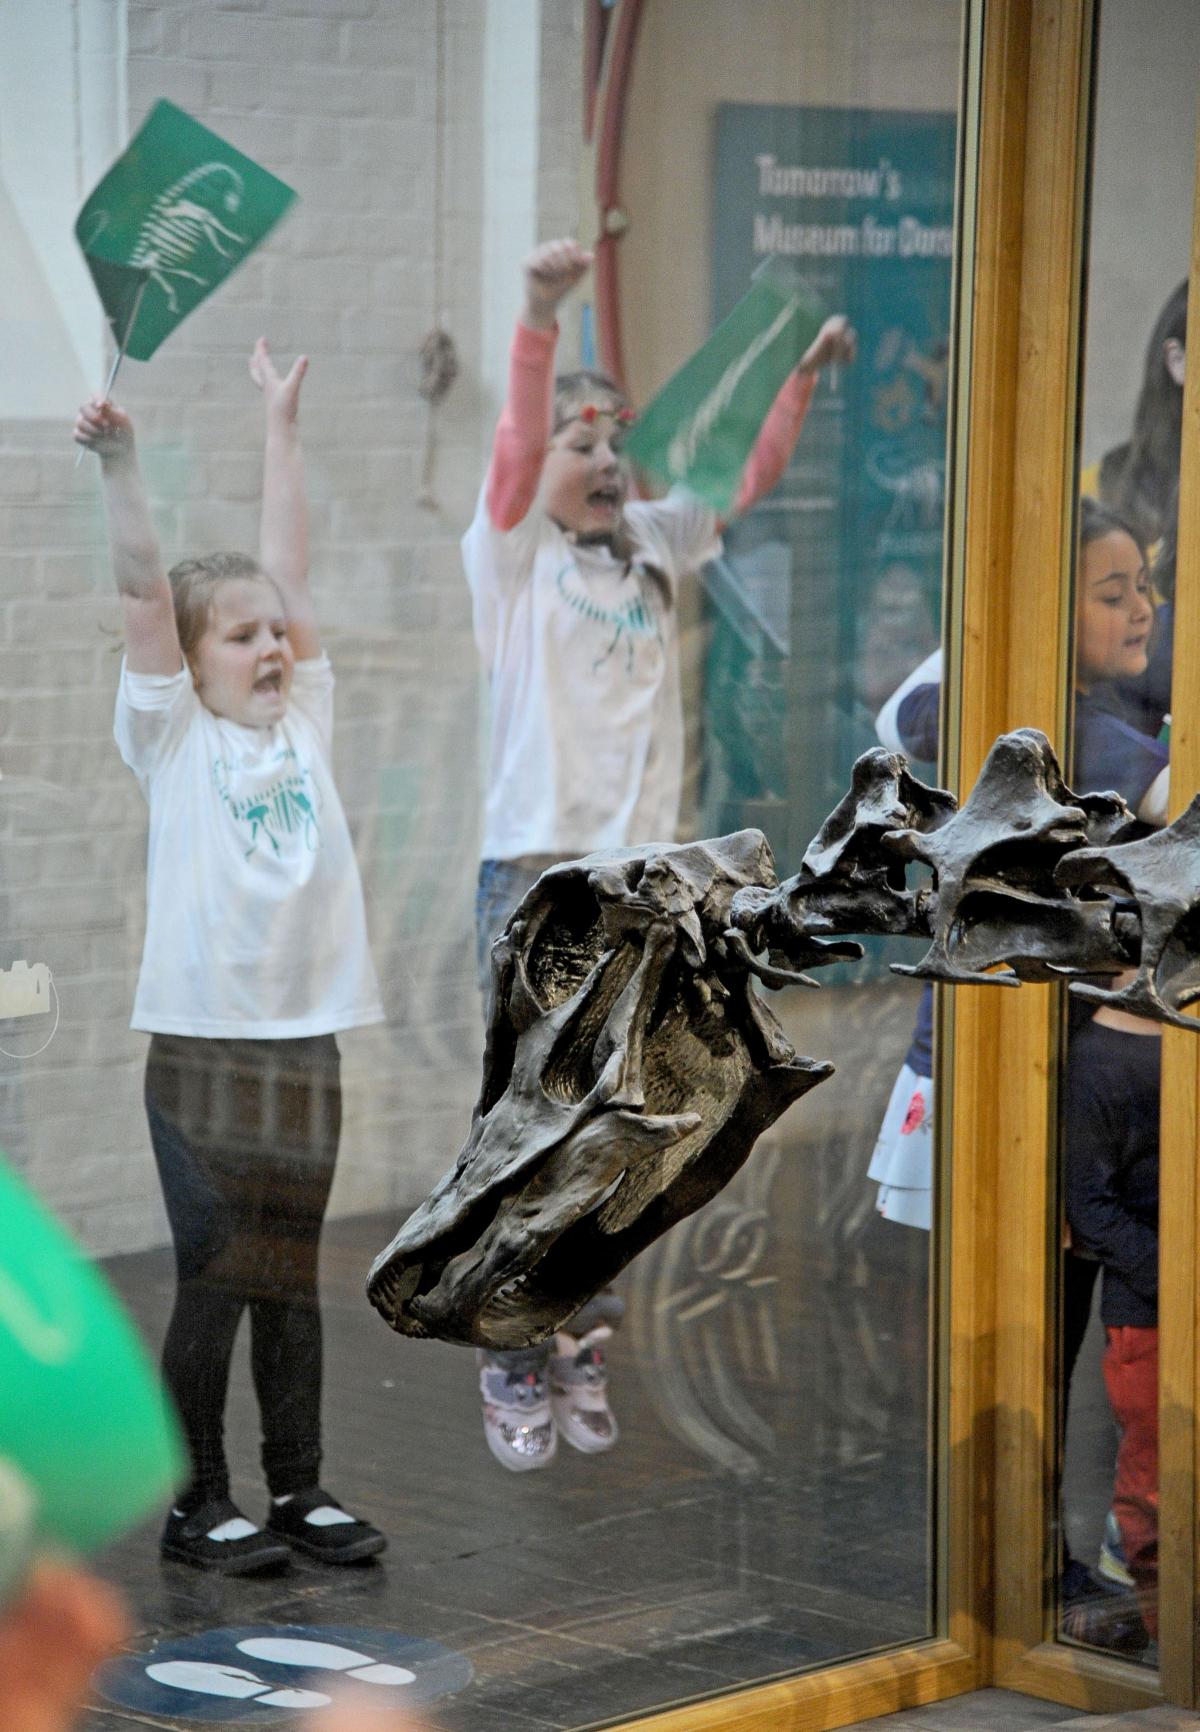 FAREWELL: Children say goodbye to their favourite dinosaur